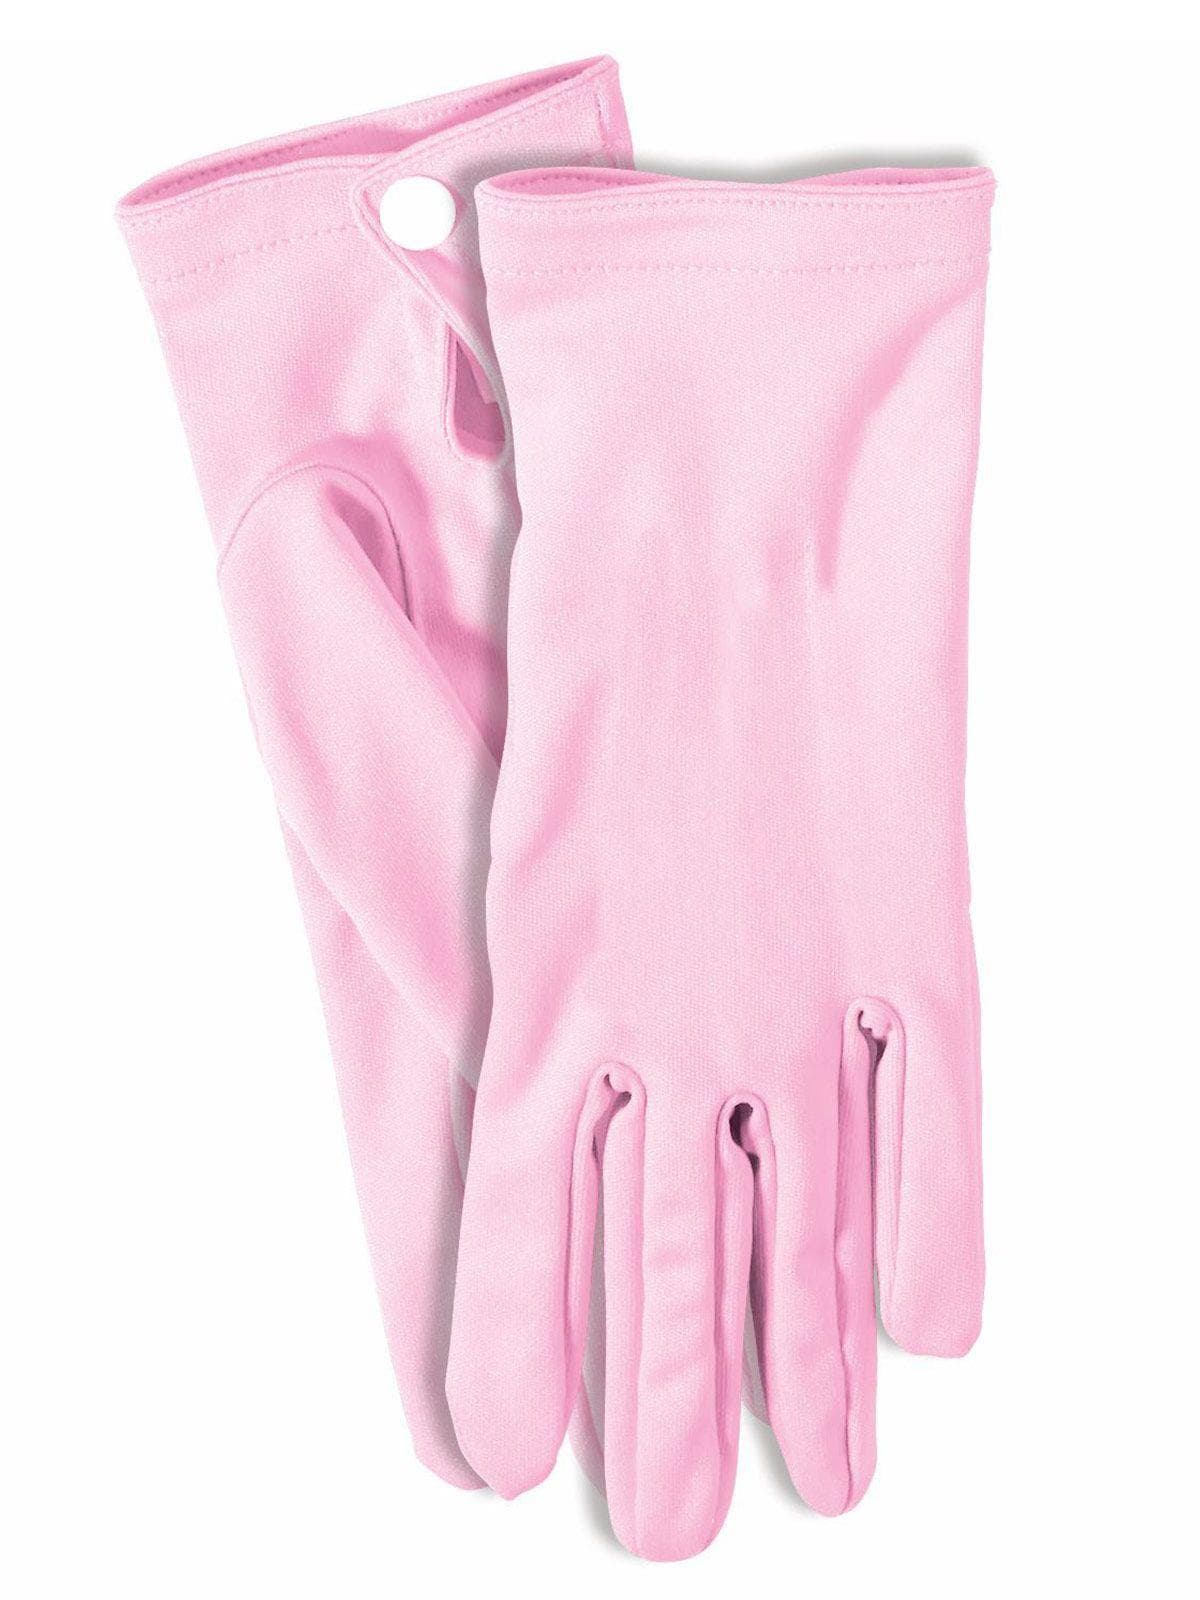 Pink Short Gloves - costumes.com